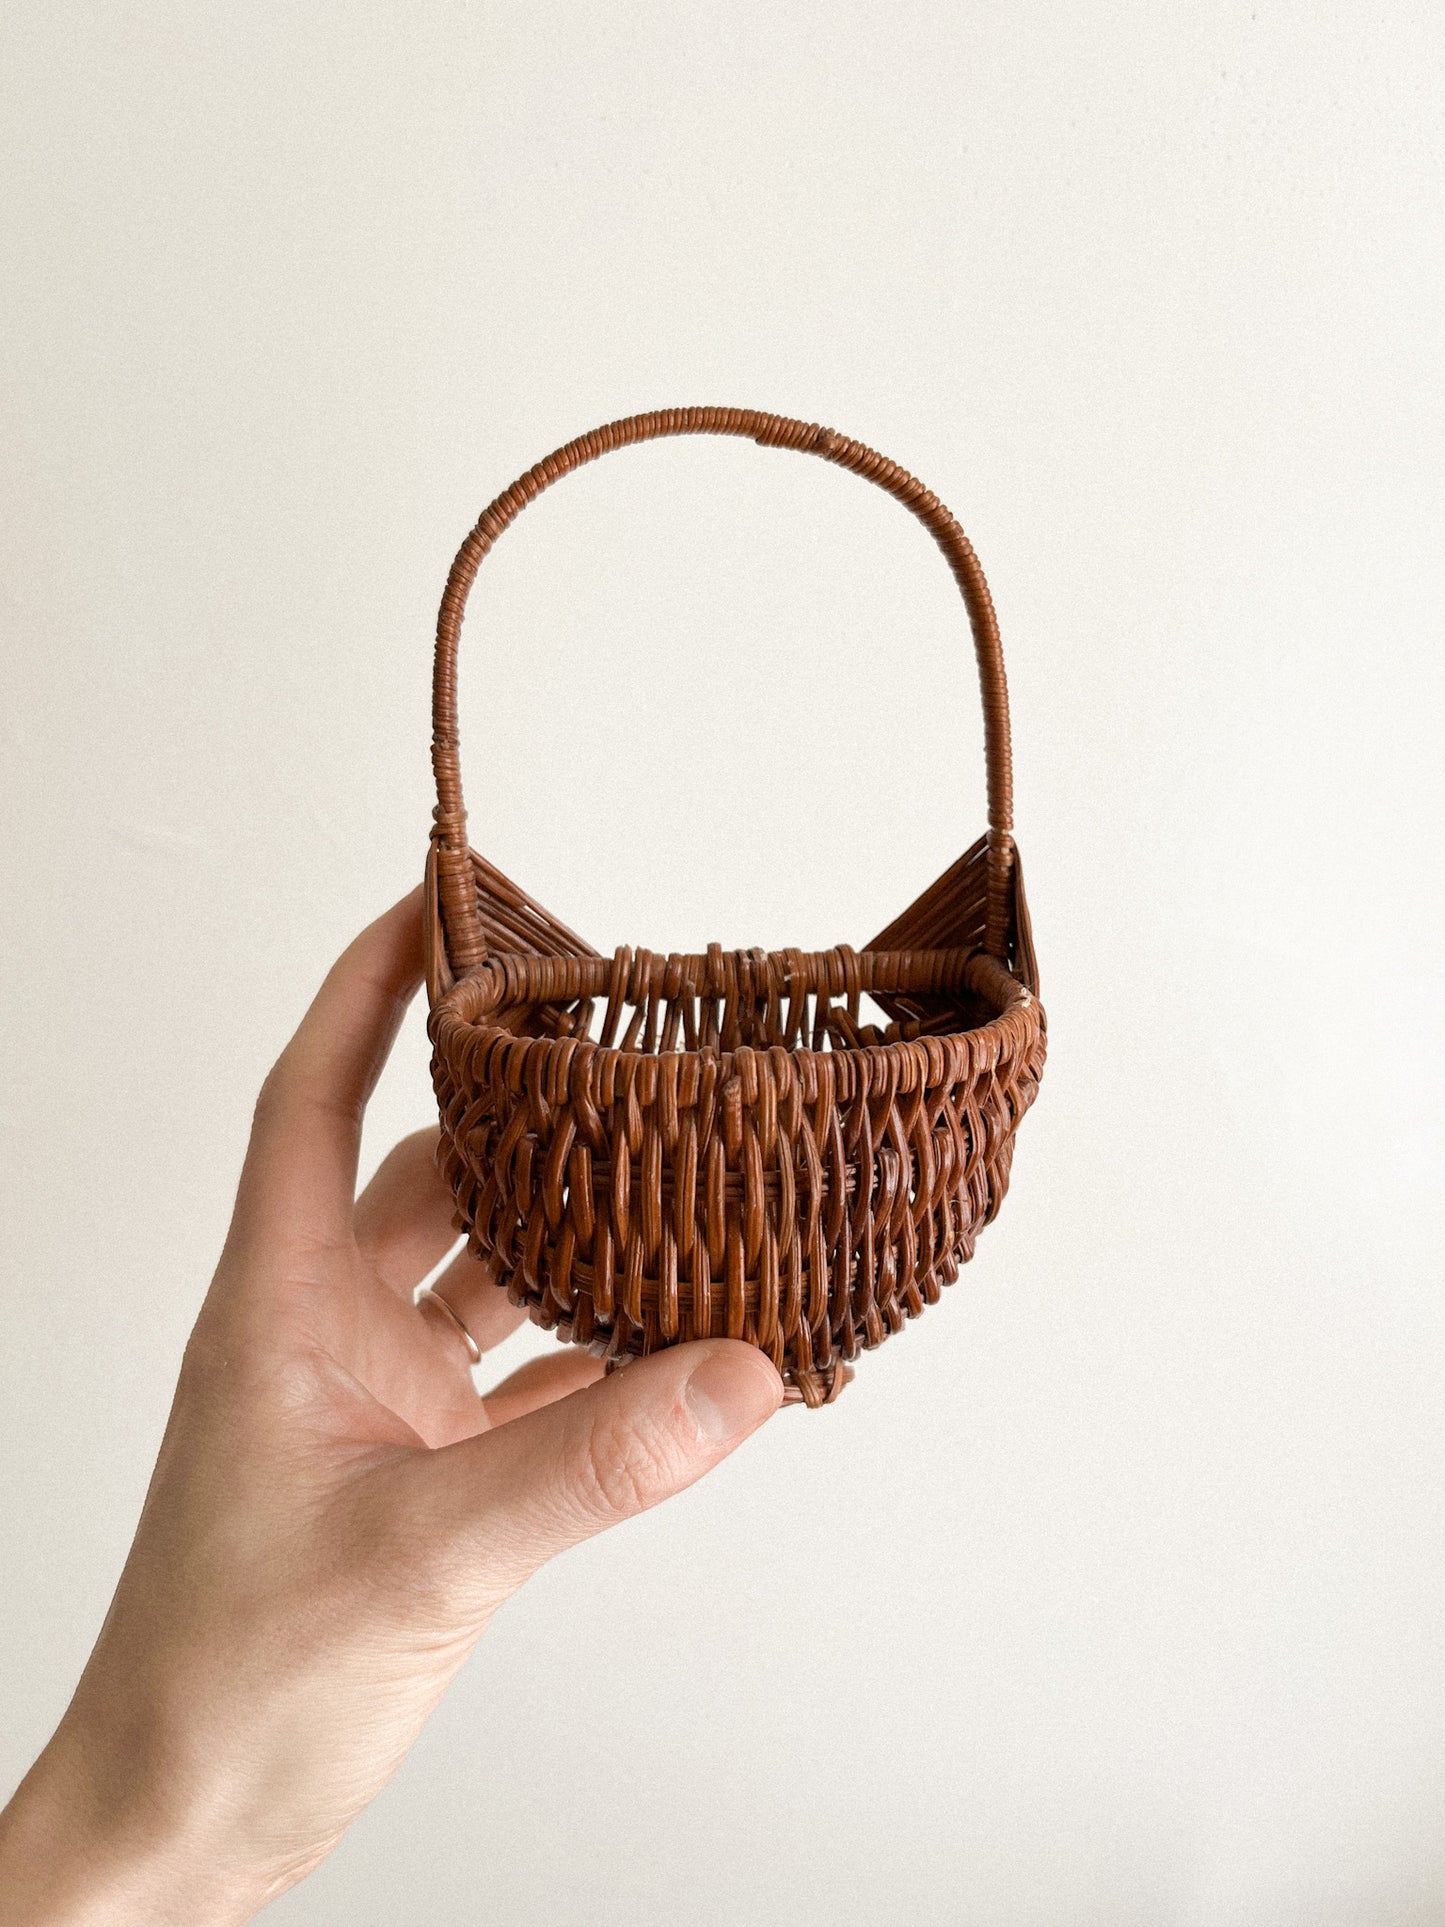 Mini Hanging Baskets